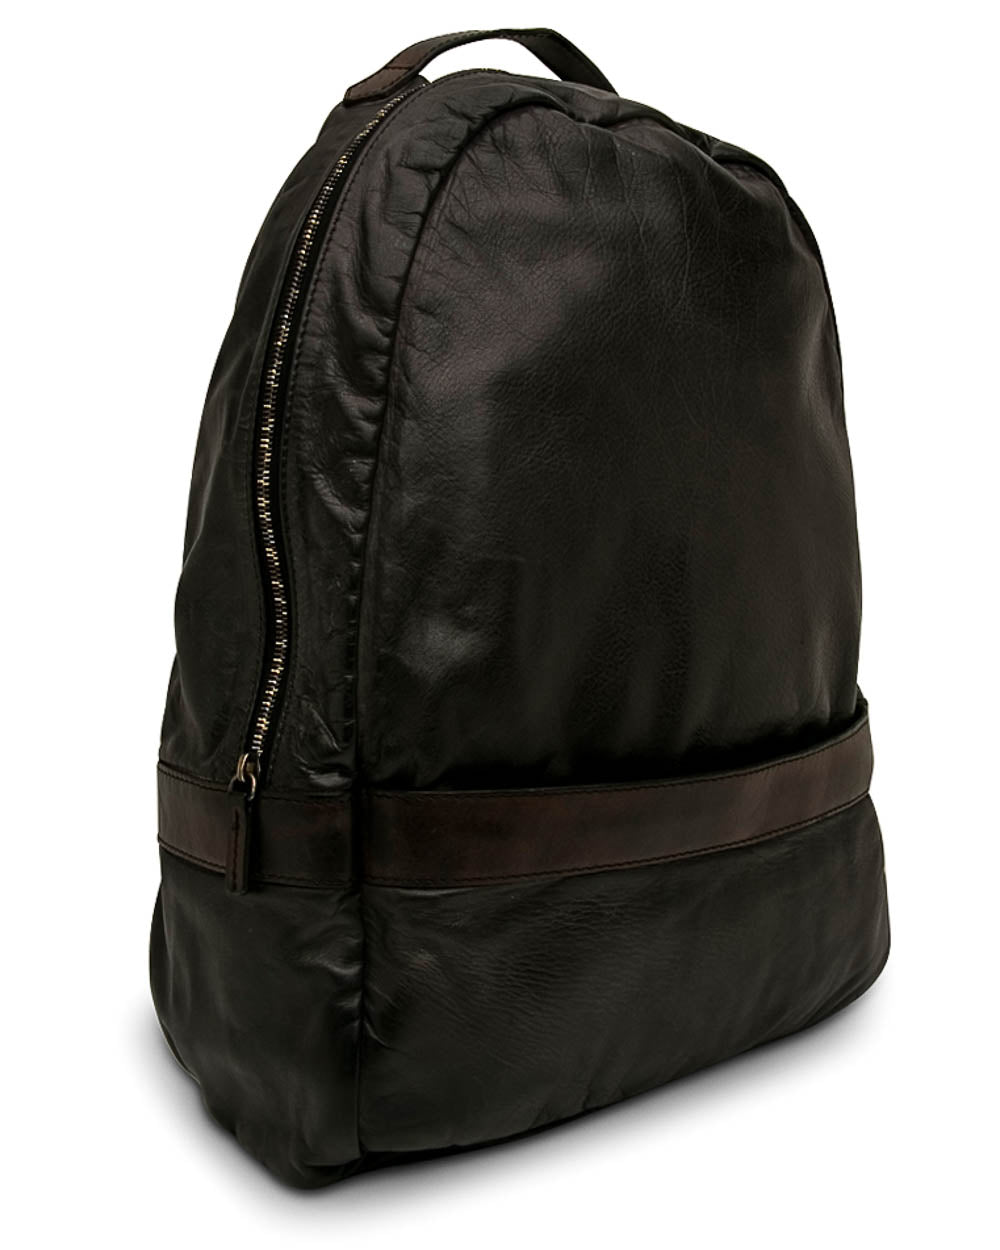 Black Washed Leather Backpack